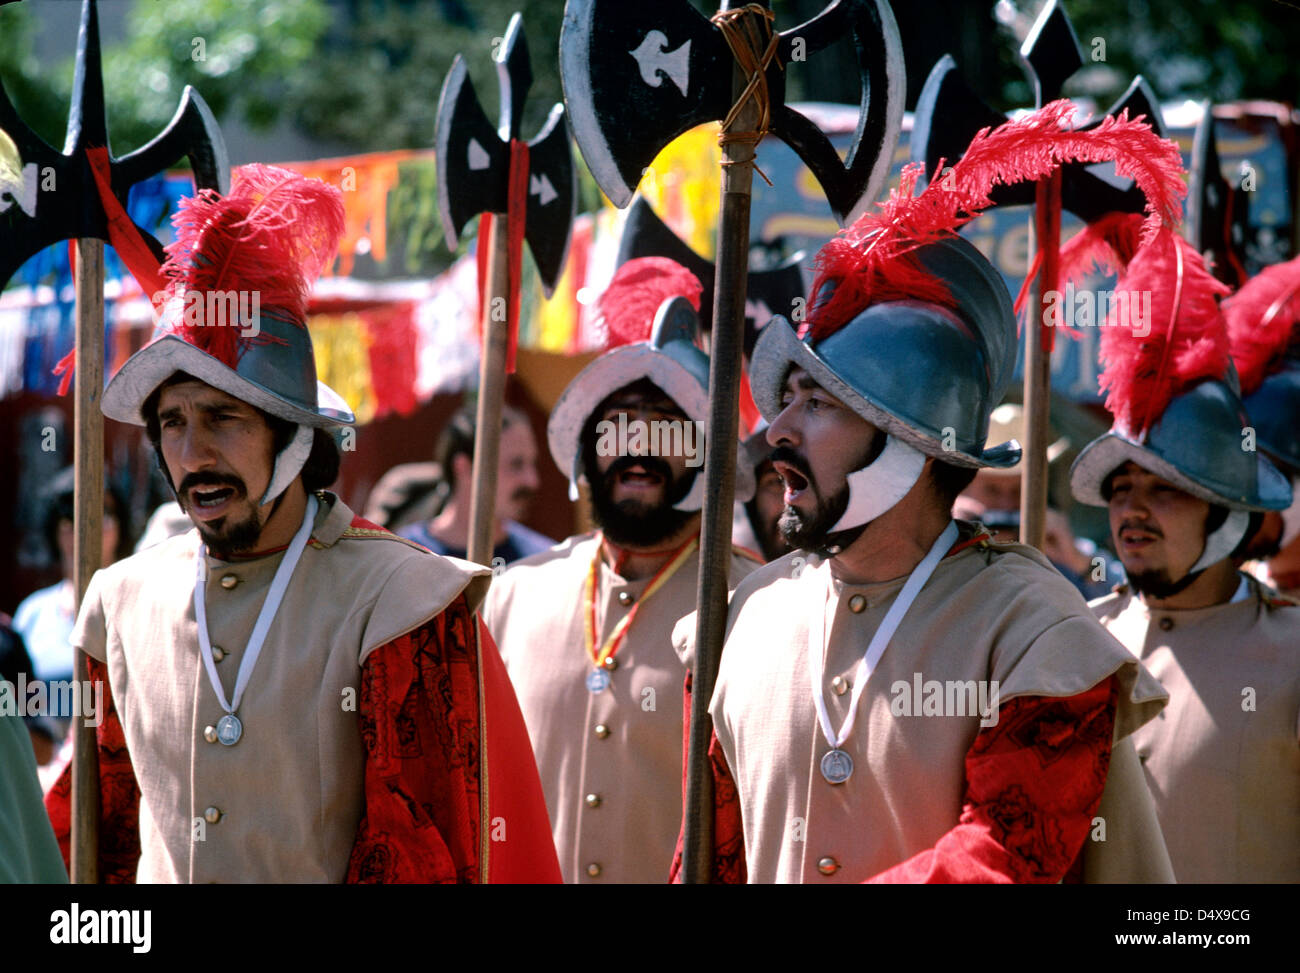 conquistadors march in the Fiesta de Santa Fe celebration Stock Photo